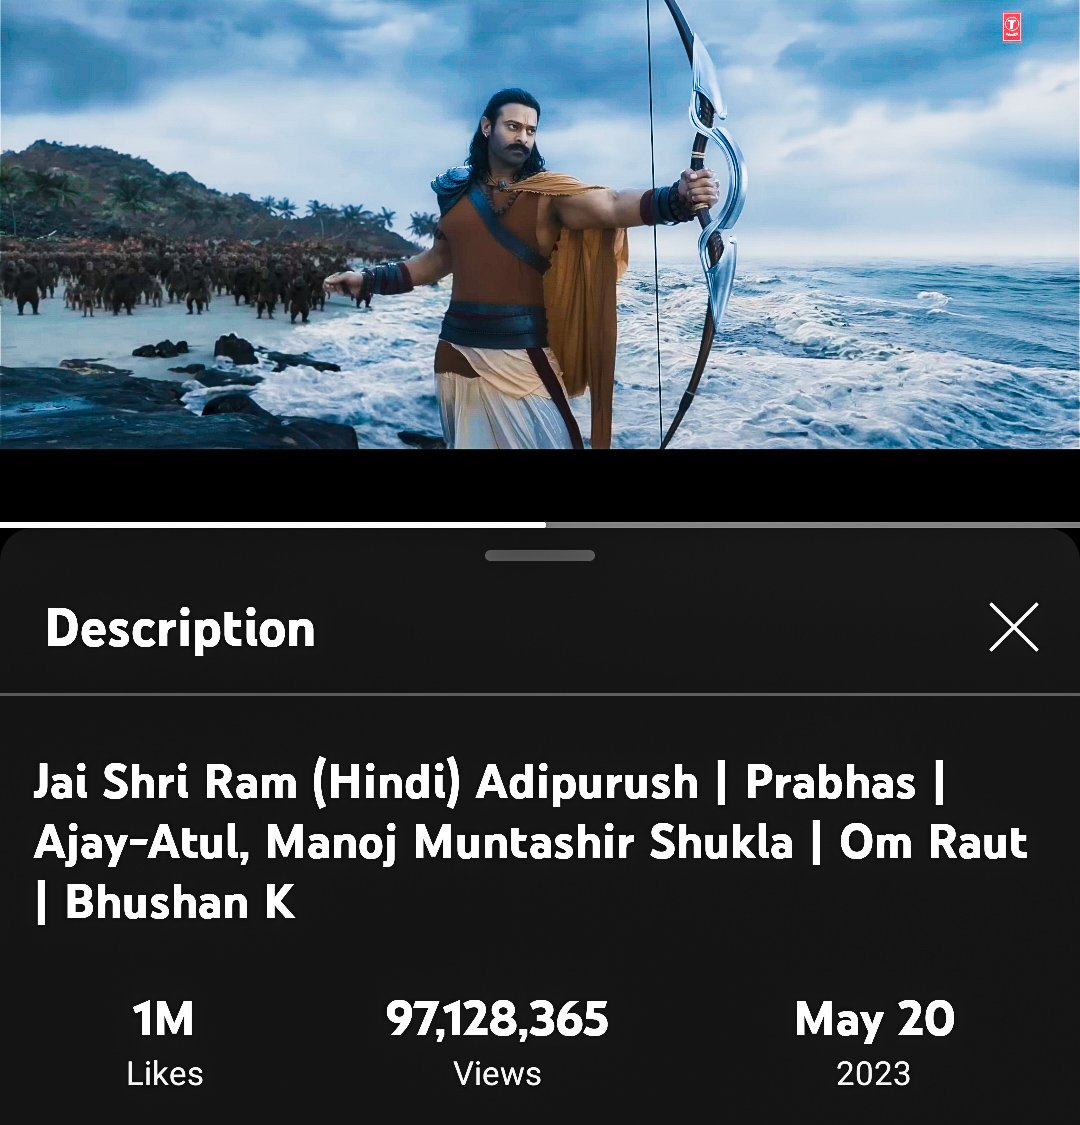 Massive 1 Million likes for the #JaiShriRam song, and it's heading towards 100 Million views 🥵🔥🔥

#Prabhas #Adipurush 🏹🔥
#AdipurushOnJune16th